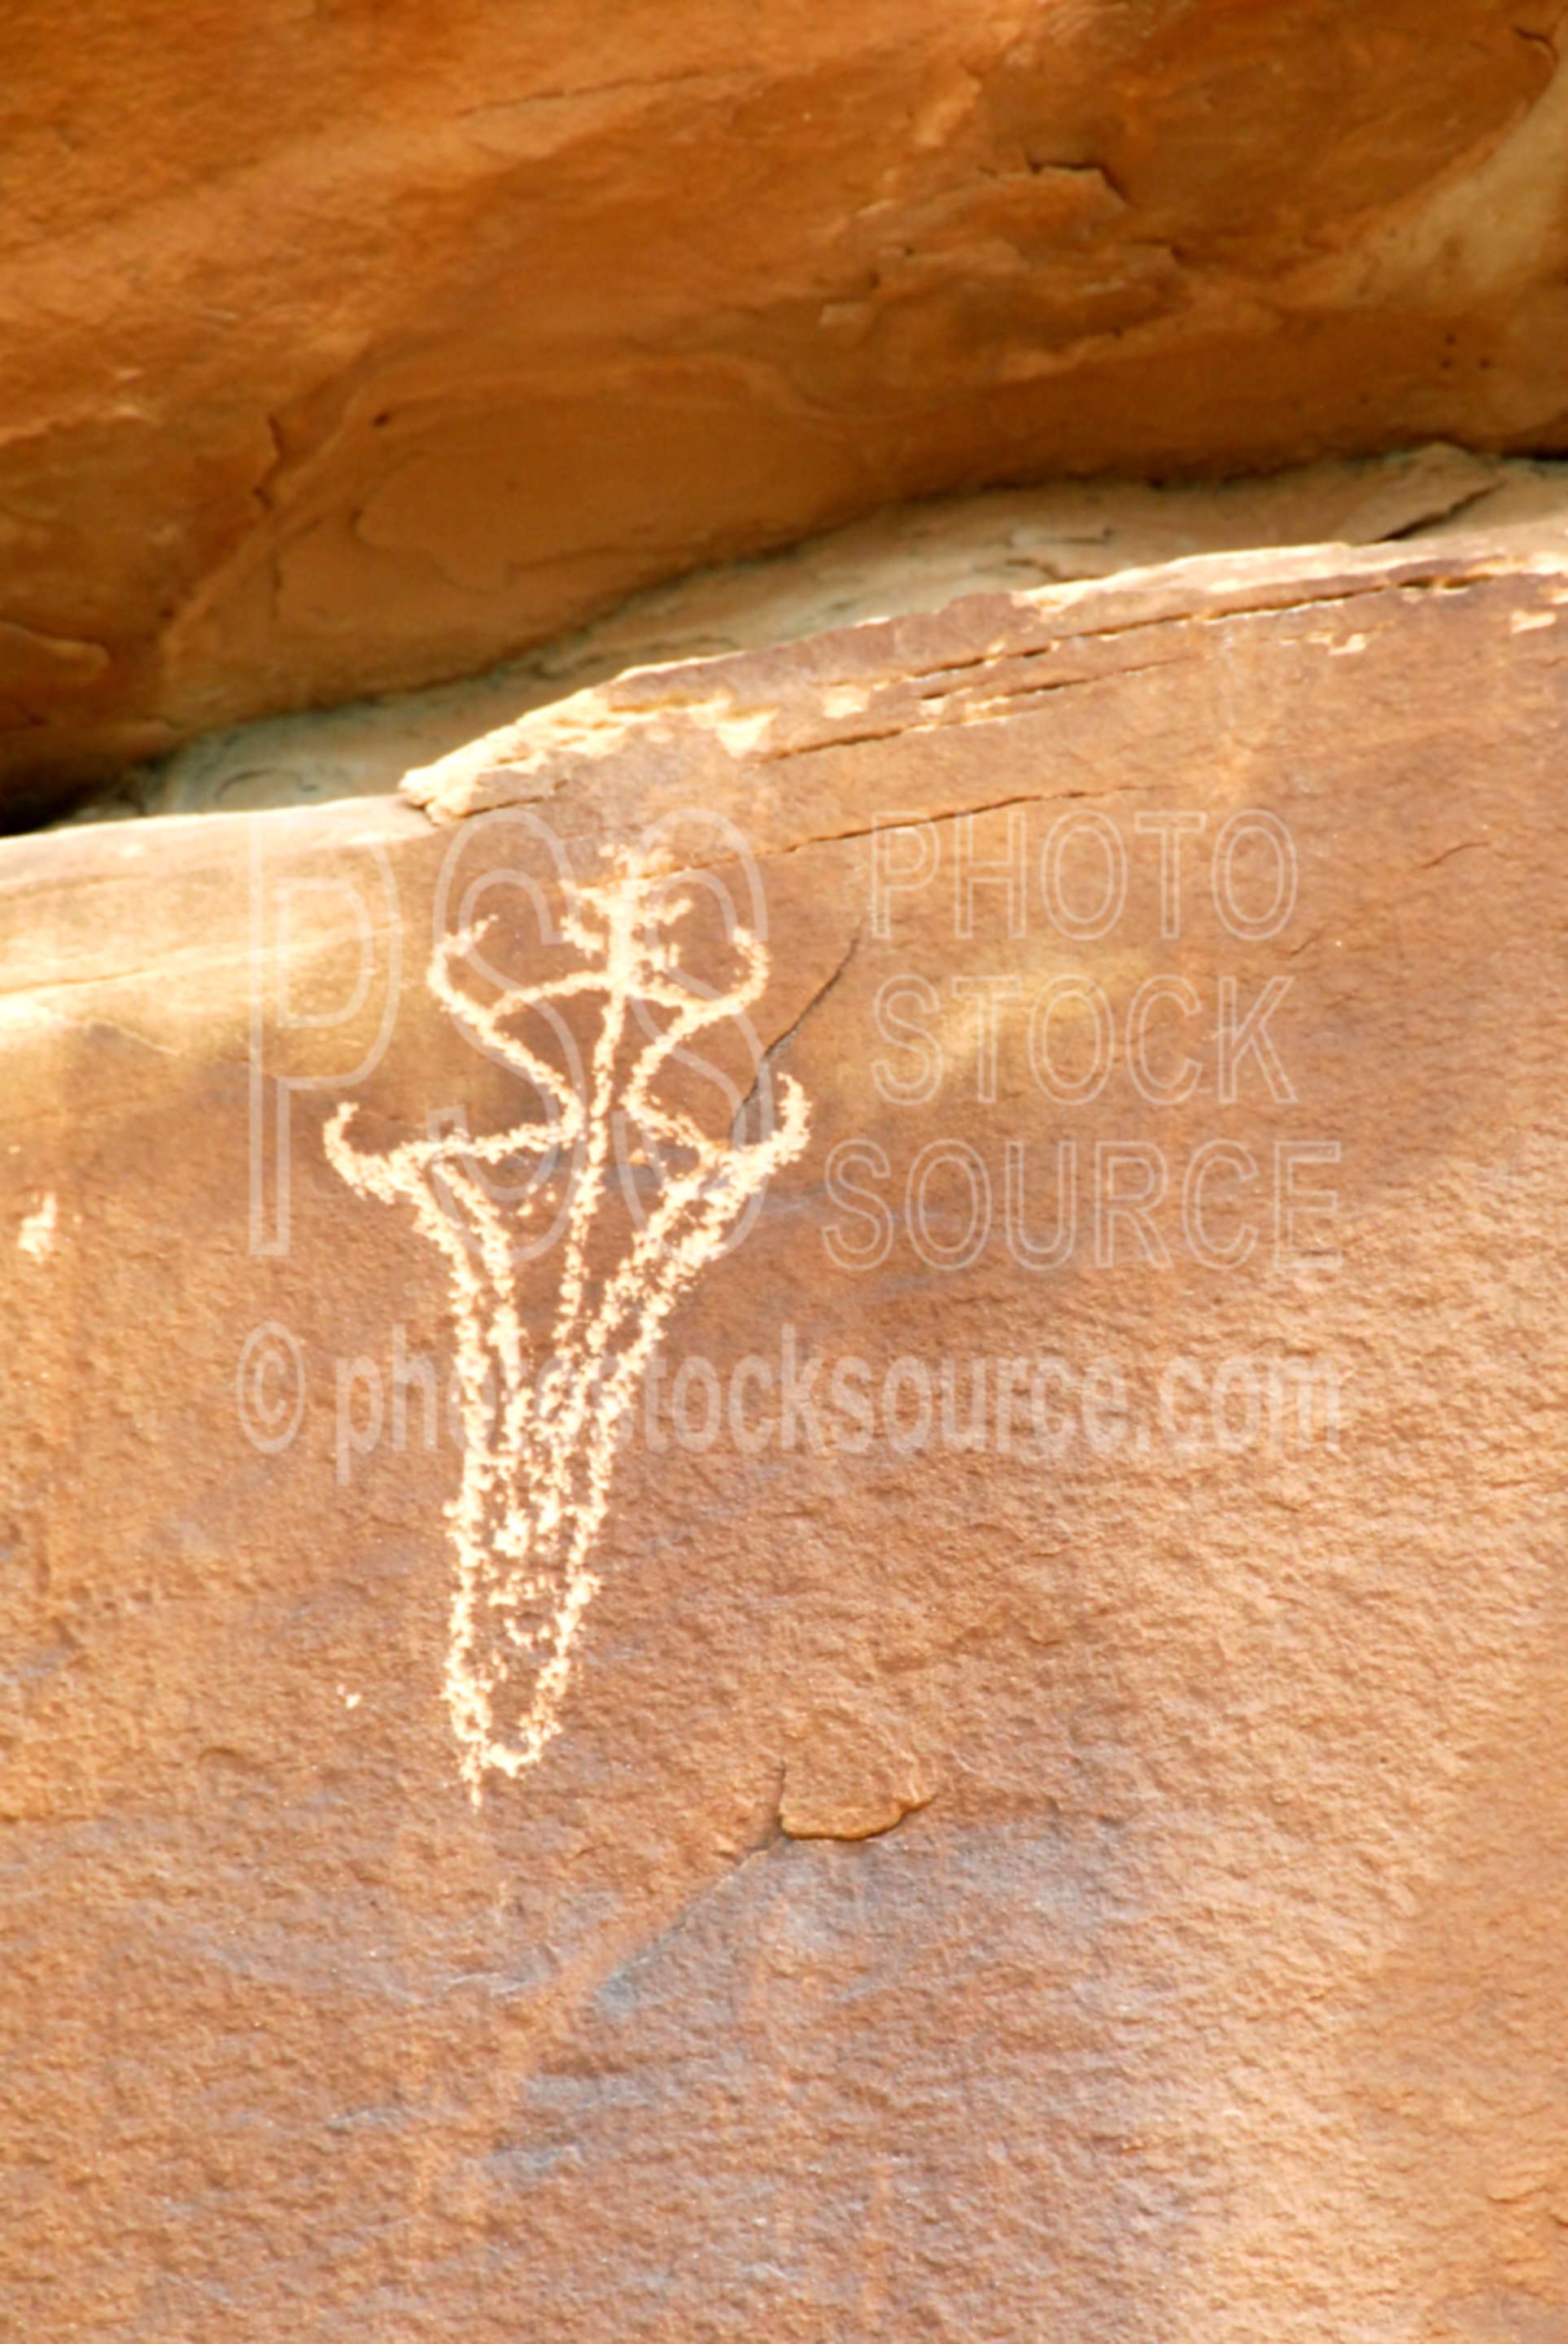 Wolfe Ranch Petroglyphs,petroglyphs,rock art,anasazi,indian,native american,story,image,animals,sheep,horse,rider